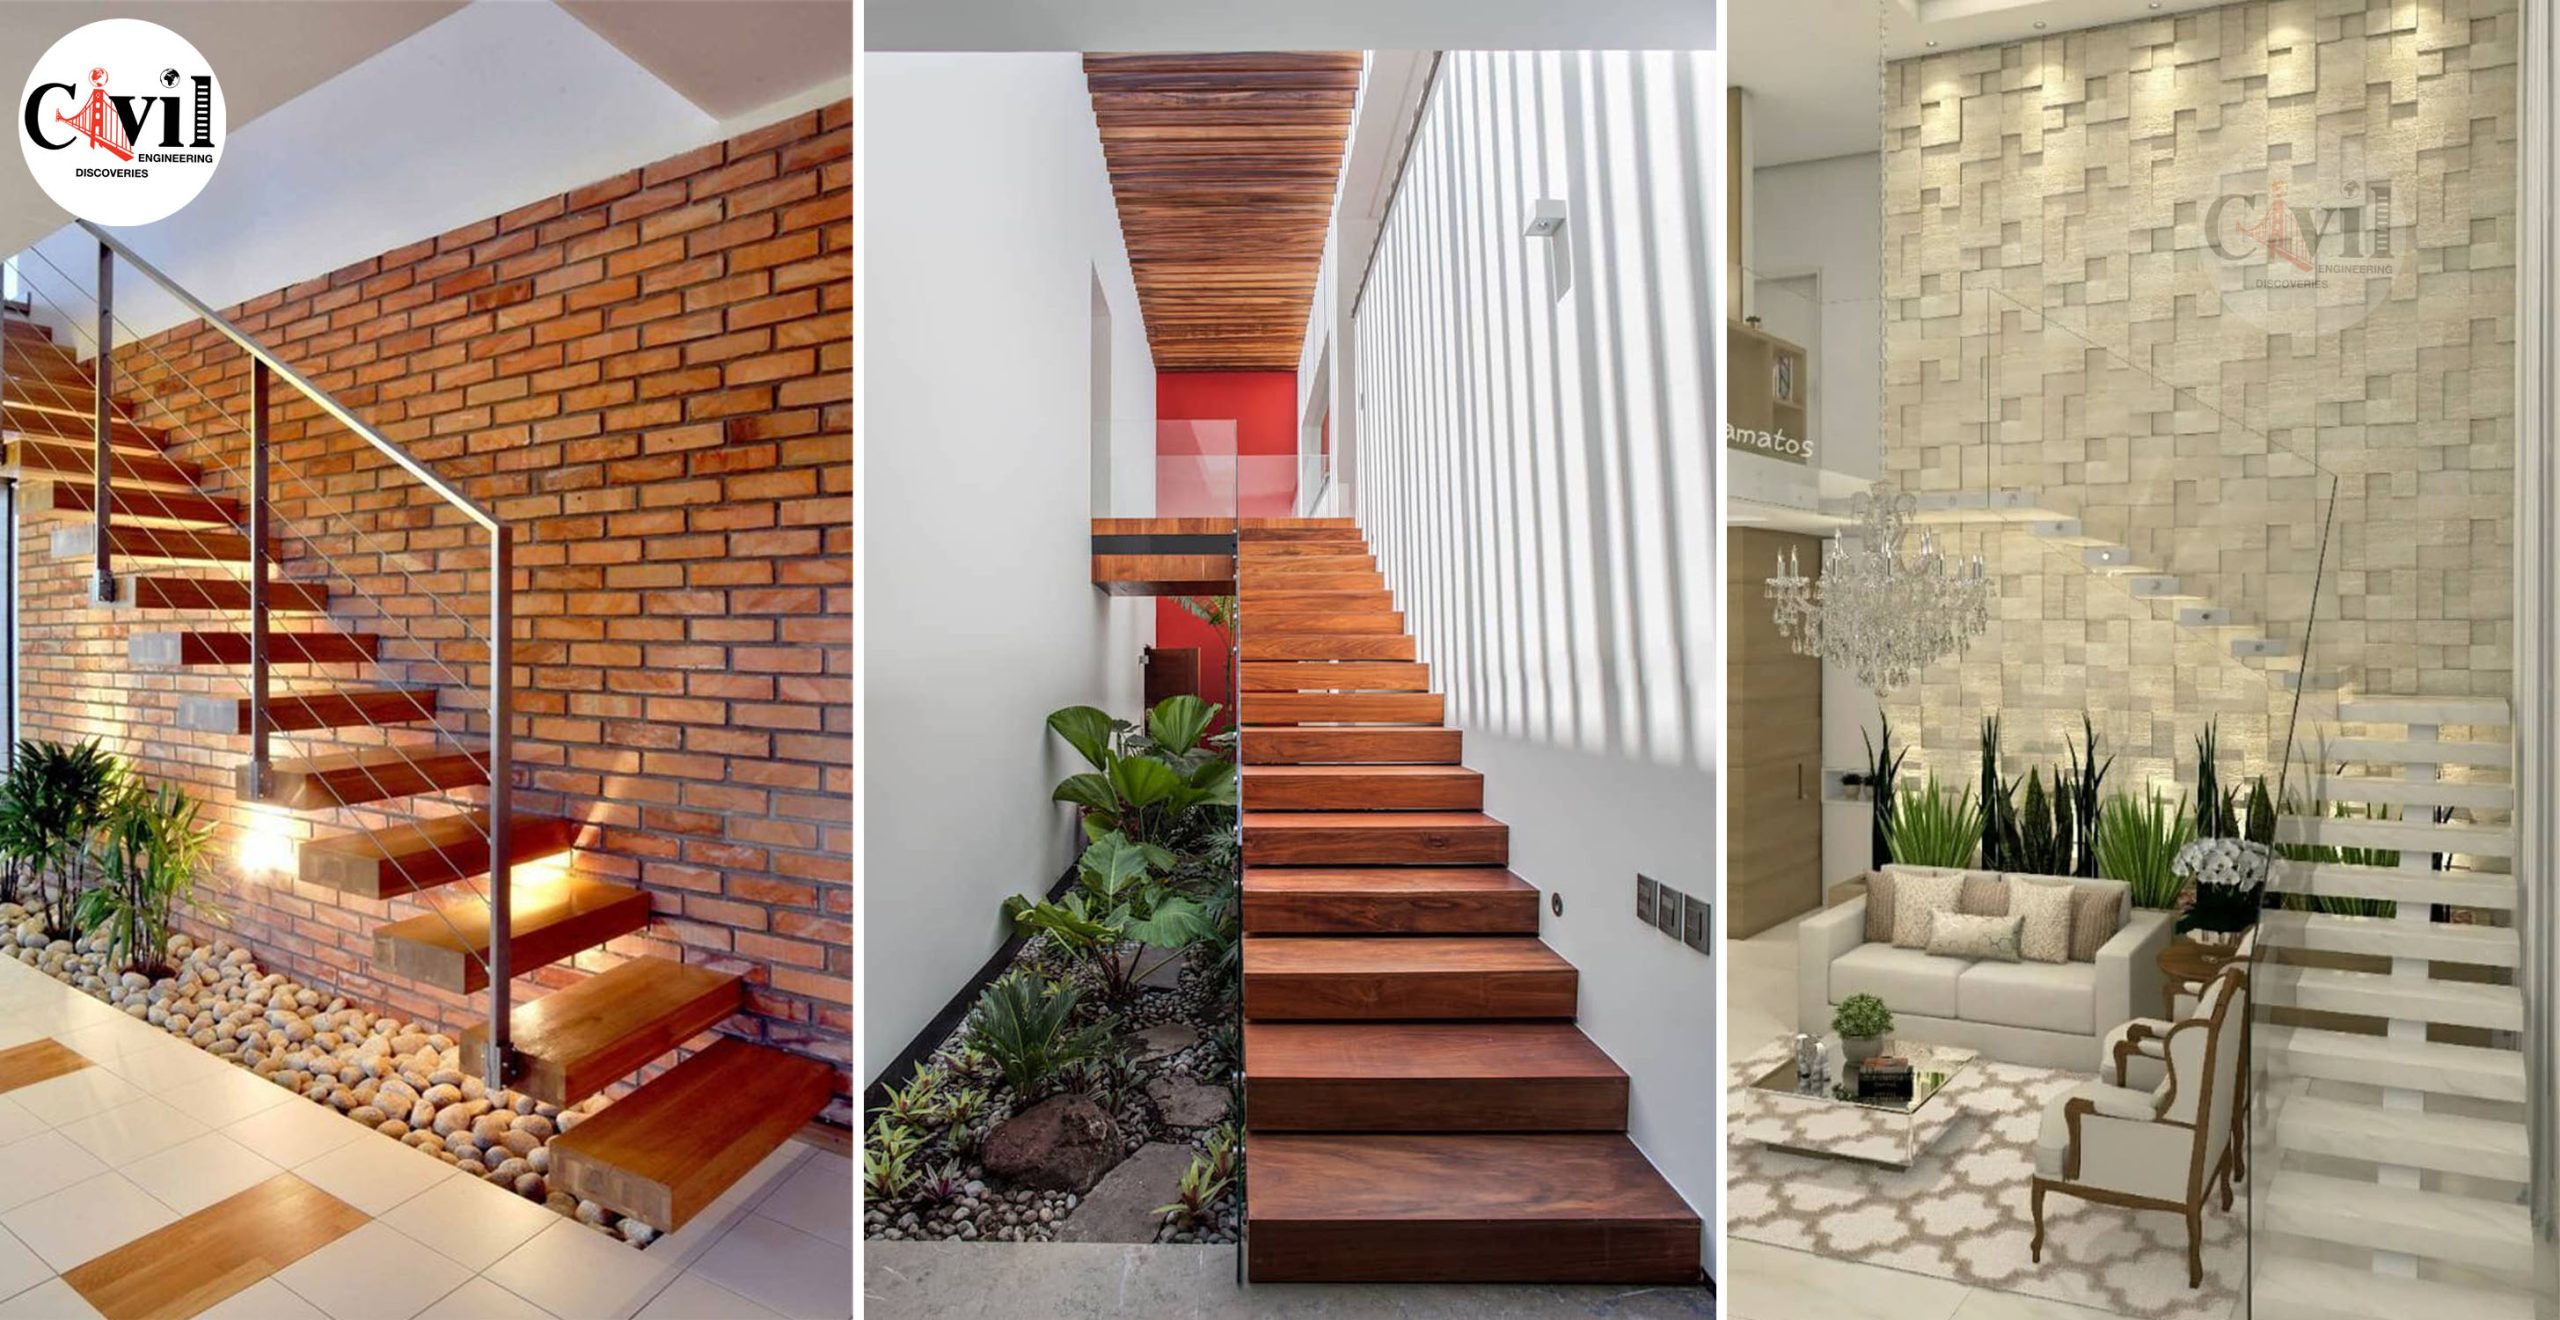 Inspiring Under-Stair Planning and Decorating Ideas - Yanko Design